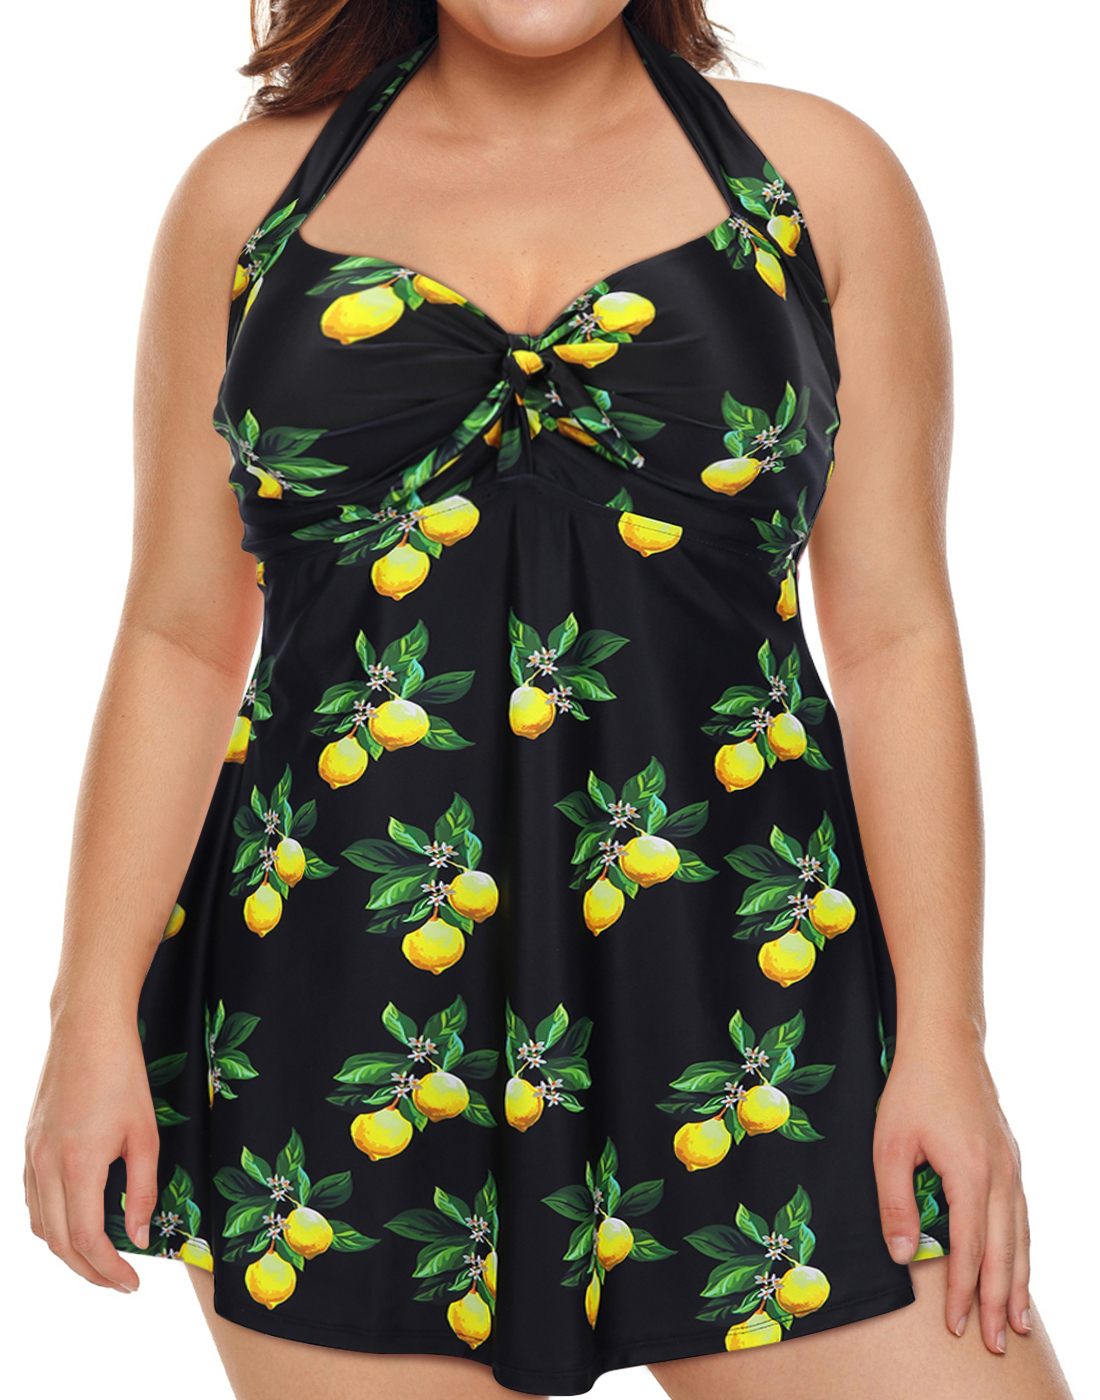 HDE Women Swim Dress Tummy Control One-Pieces Swimwear Lemons 18 - image 1 of 6